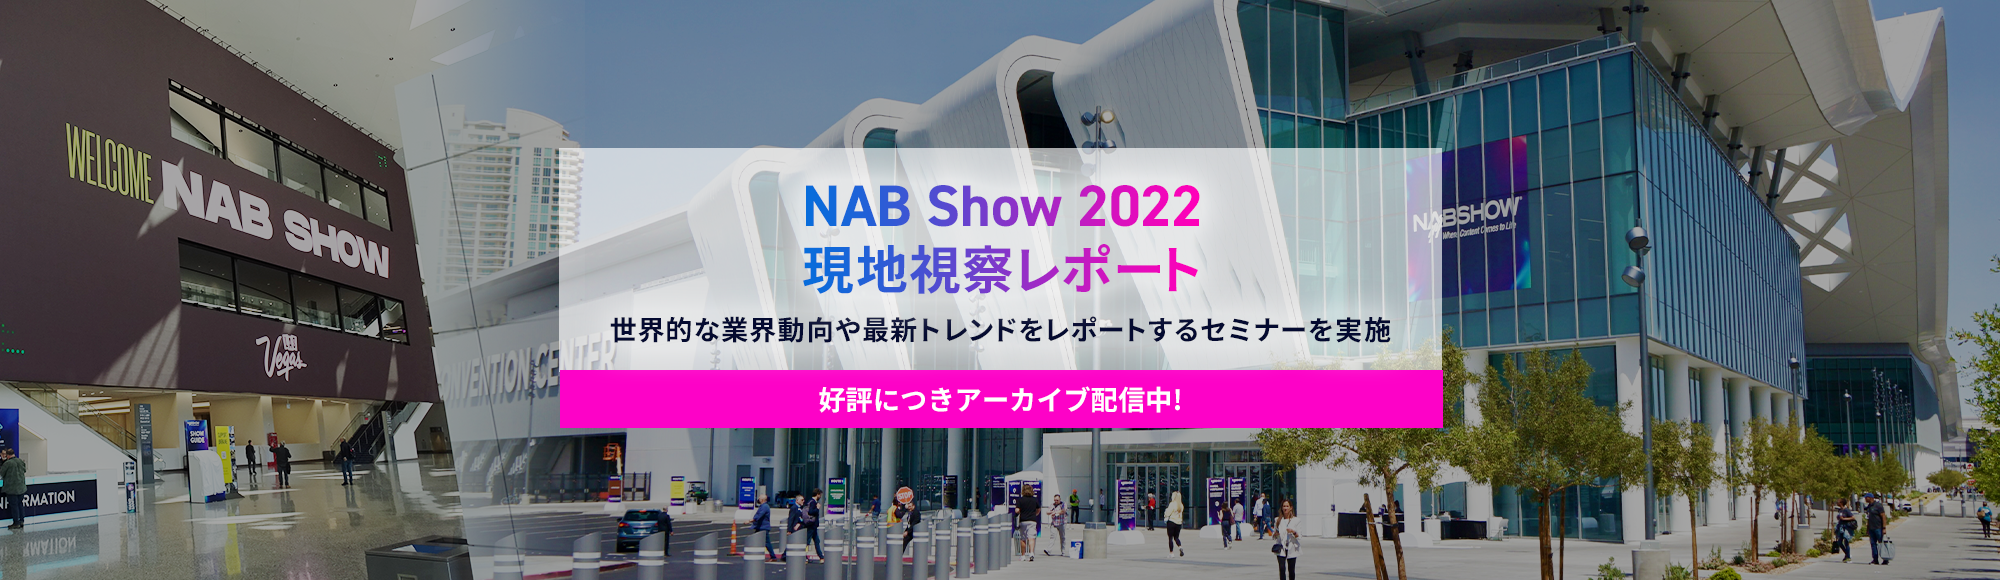 NAB SHOW 2022 レポート PC用